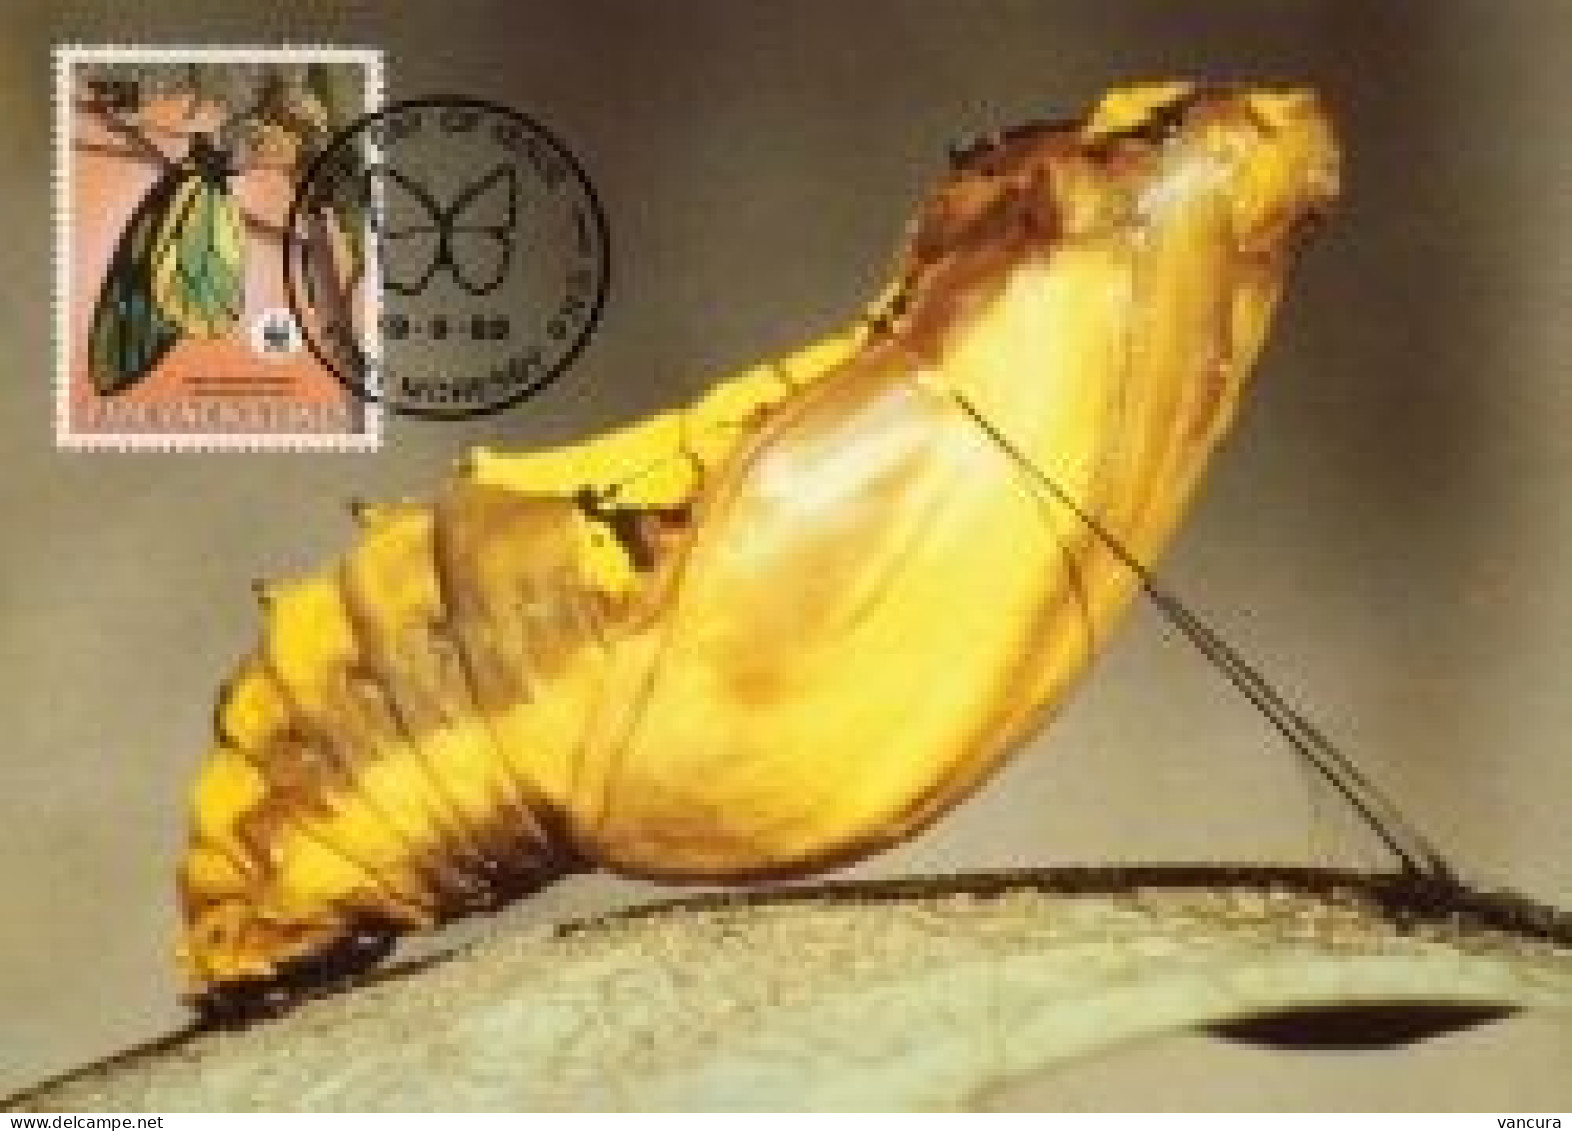 CM Papua New Guinea/WWF Protected Butterfly 1988 Queen Alexandra's Birdwing - Mariposas